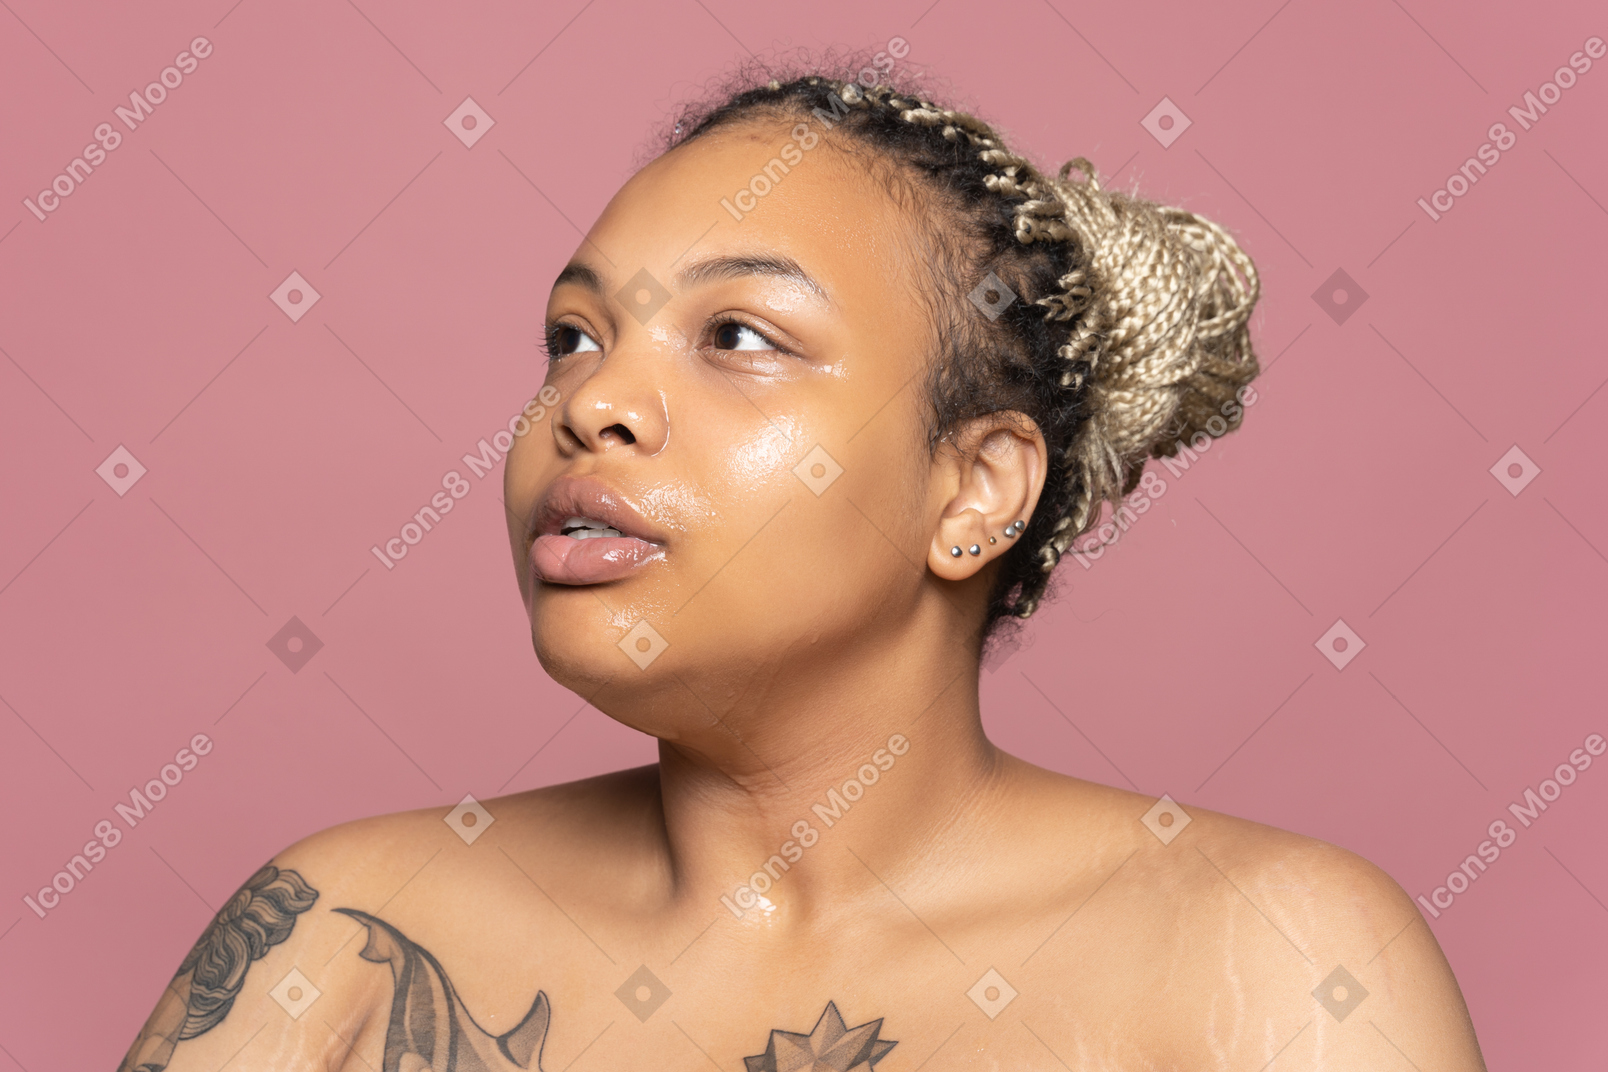 Portrait of a plump tattooed woman